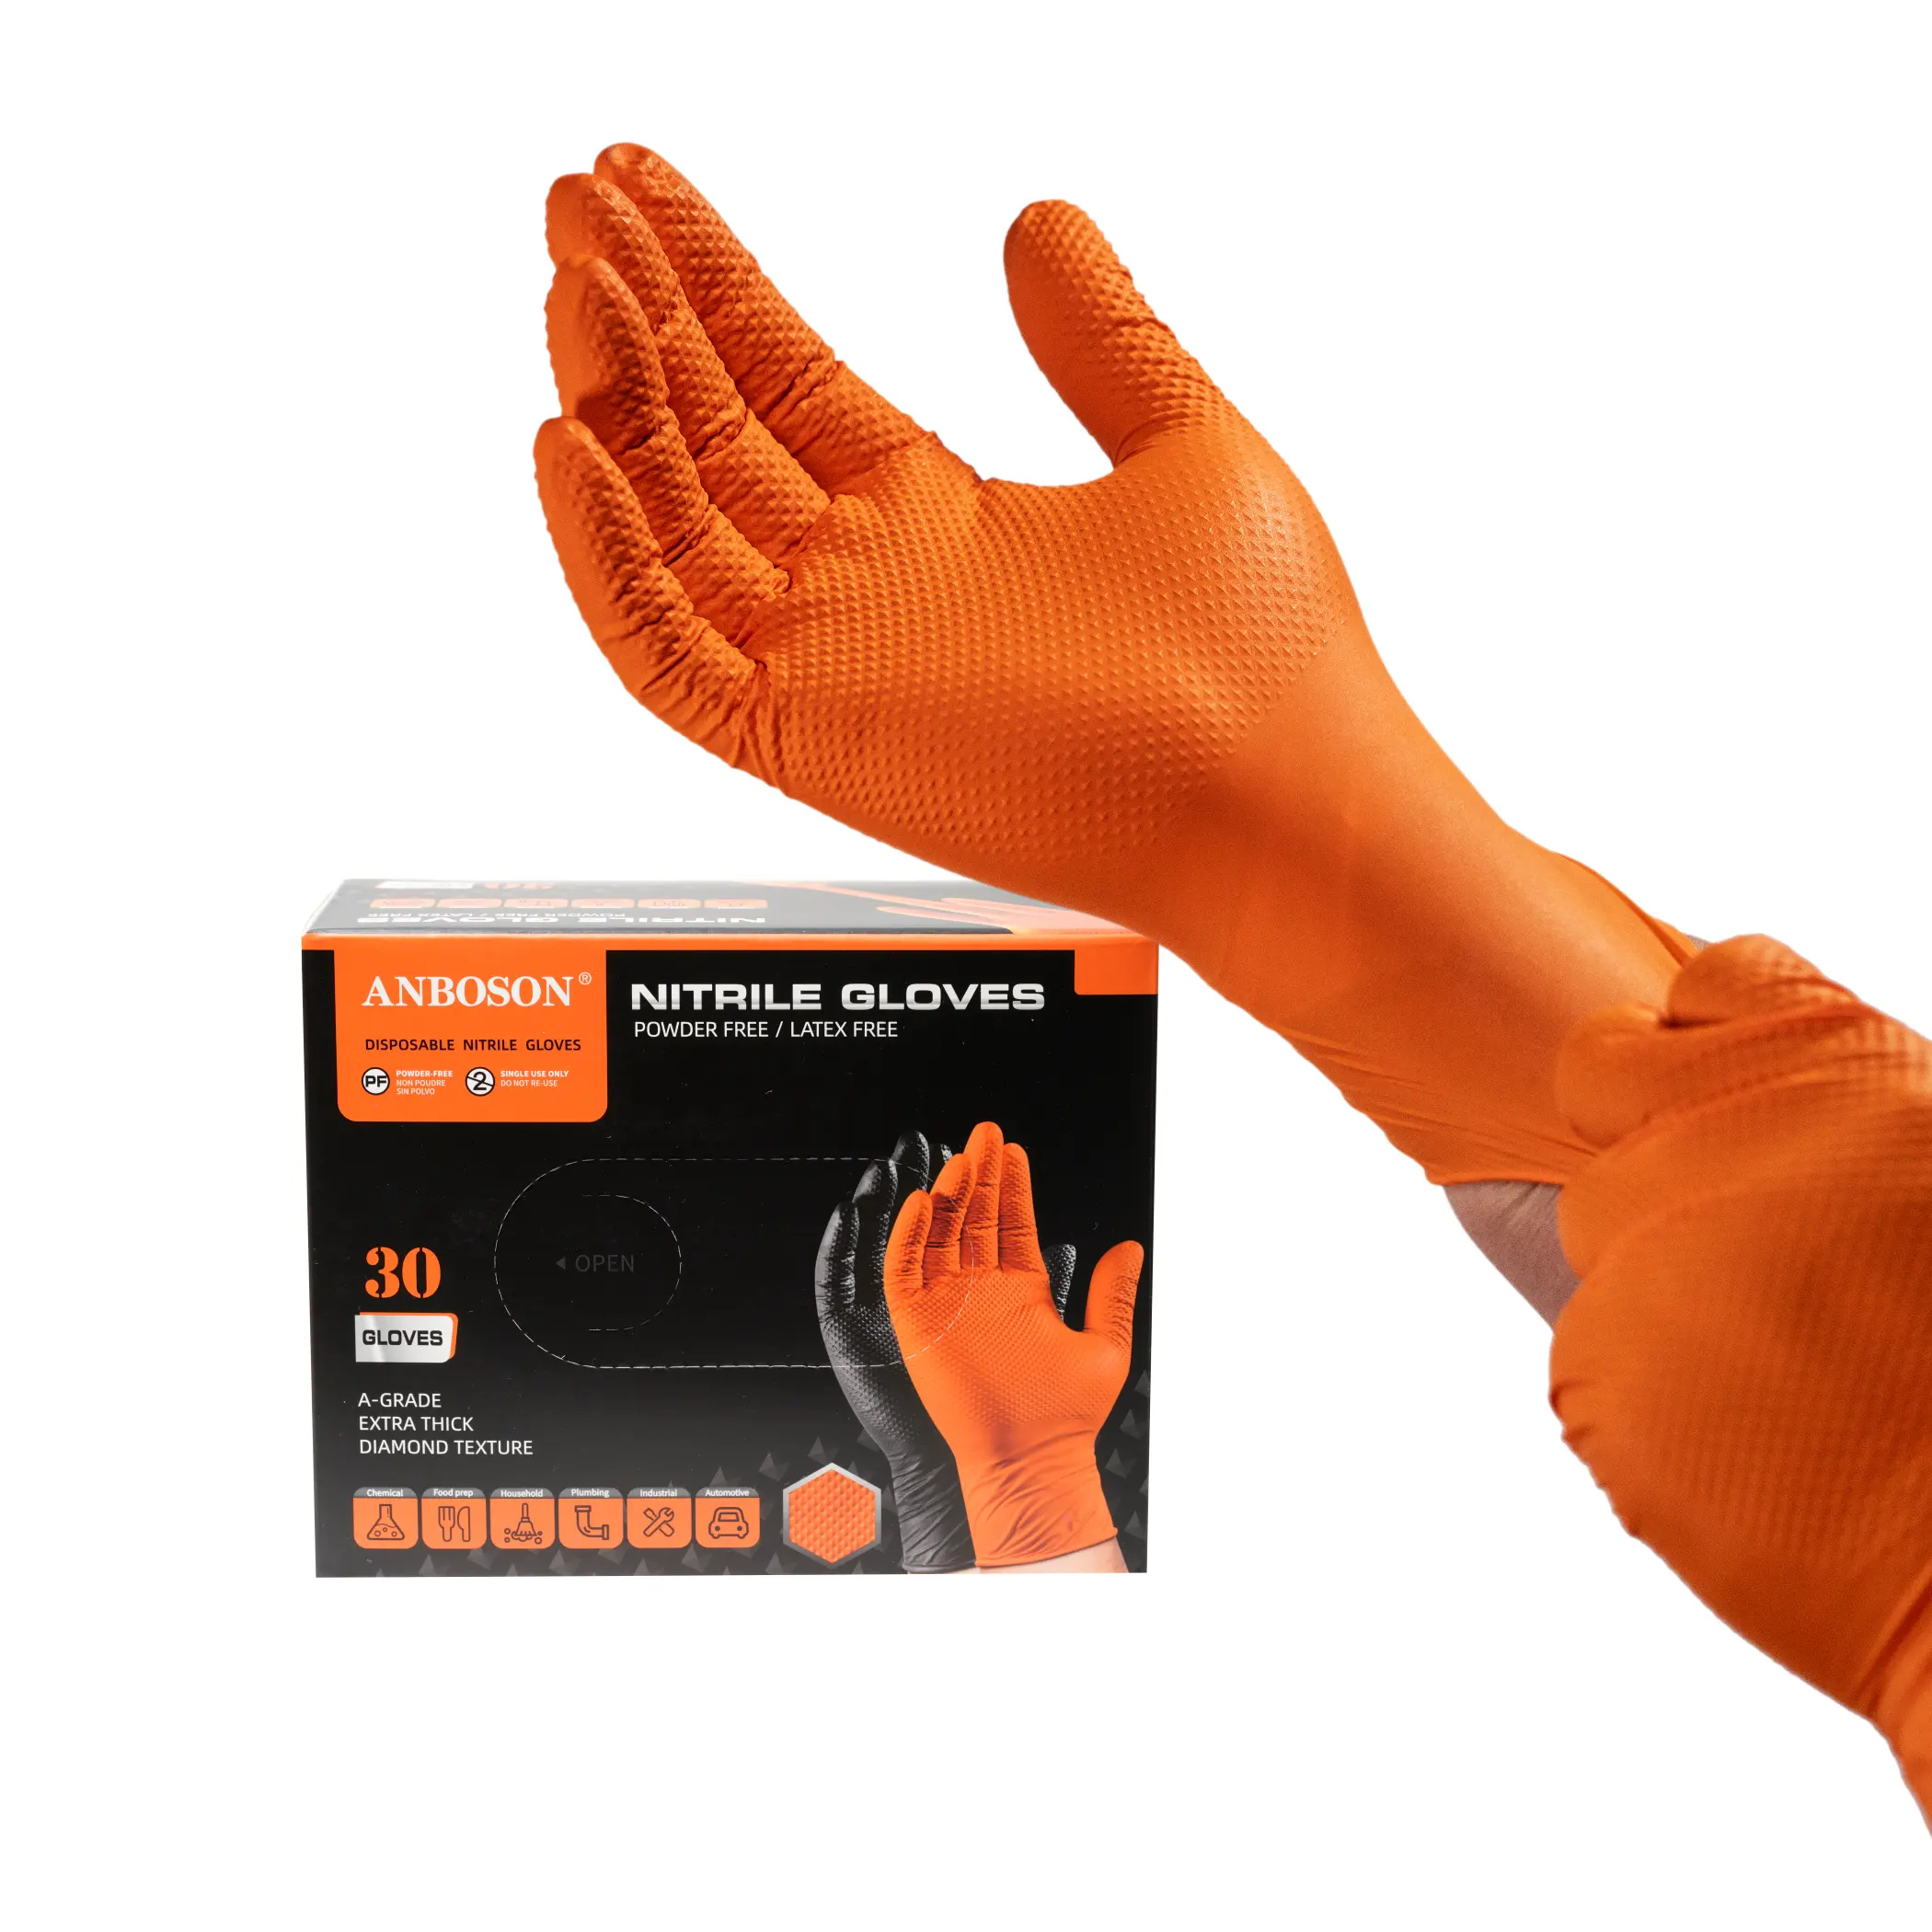 10mil Black Orange Mechanical Heavy Duty Powder Free Rubber Disposable Safety Nitrile Mechanic Gloves For Work